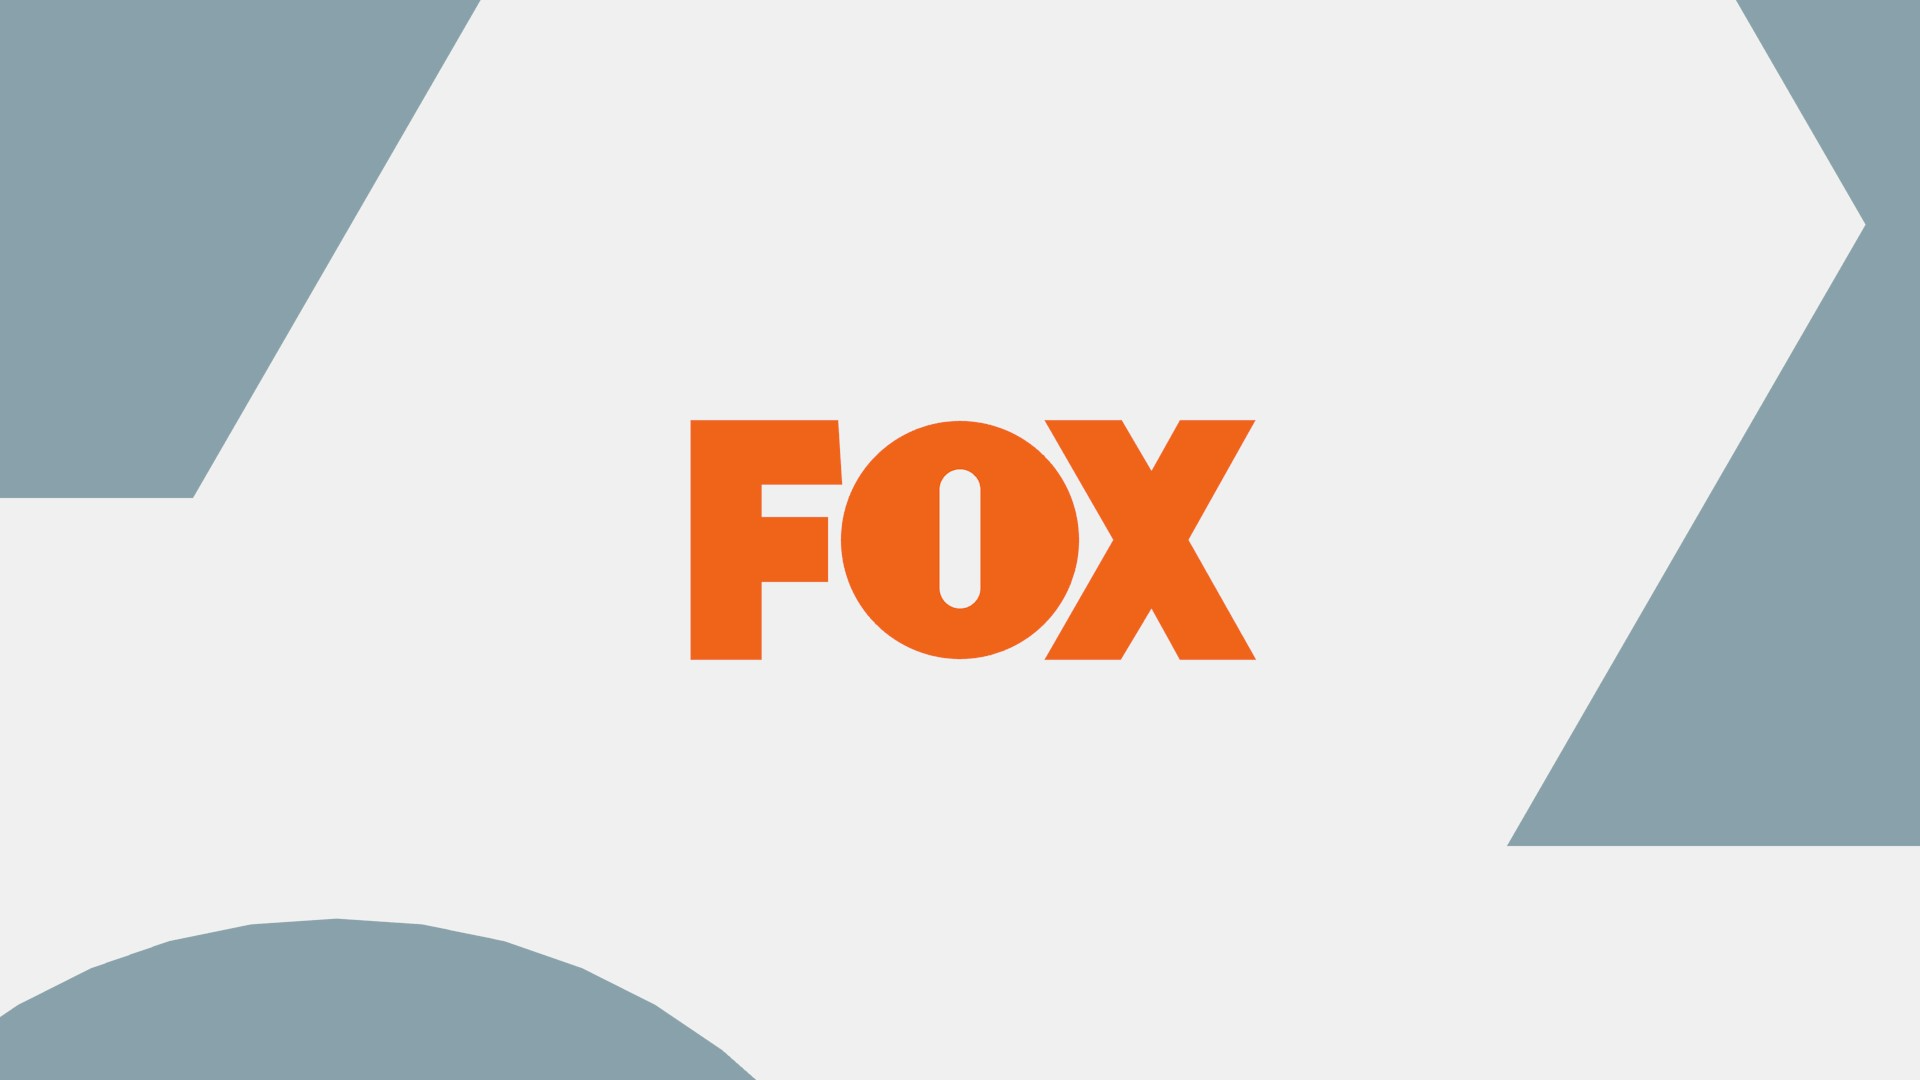 Fox New logo. Fox Entertainment Group logo. EVOS Branding. Dominant logo. Fox entertainment